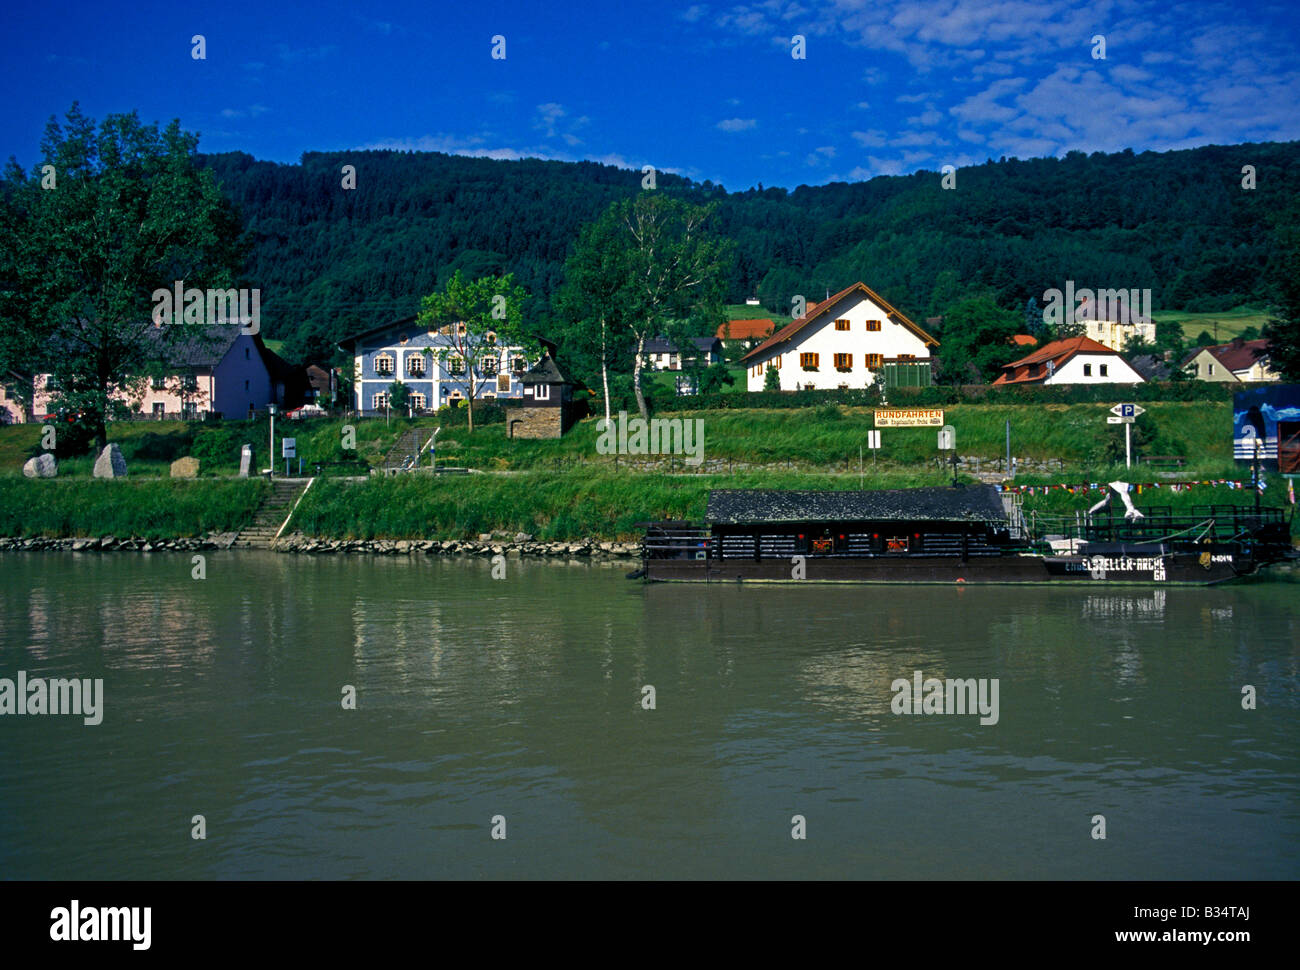 Architecture along Danube River Engelhartszell Upper Austria State Austria Europe Stock Photo